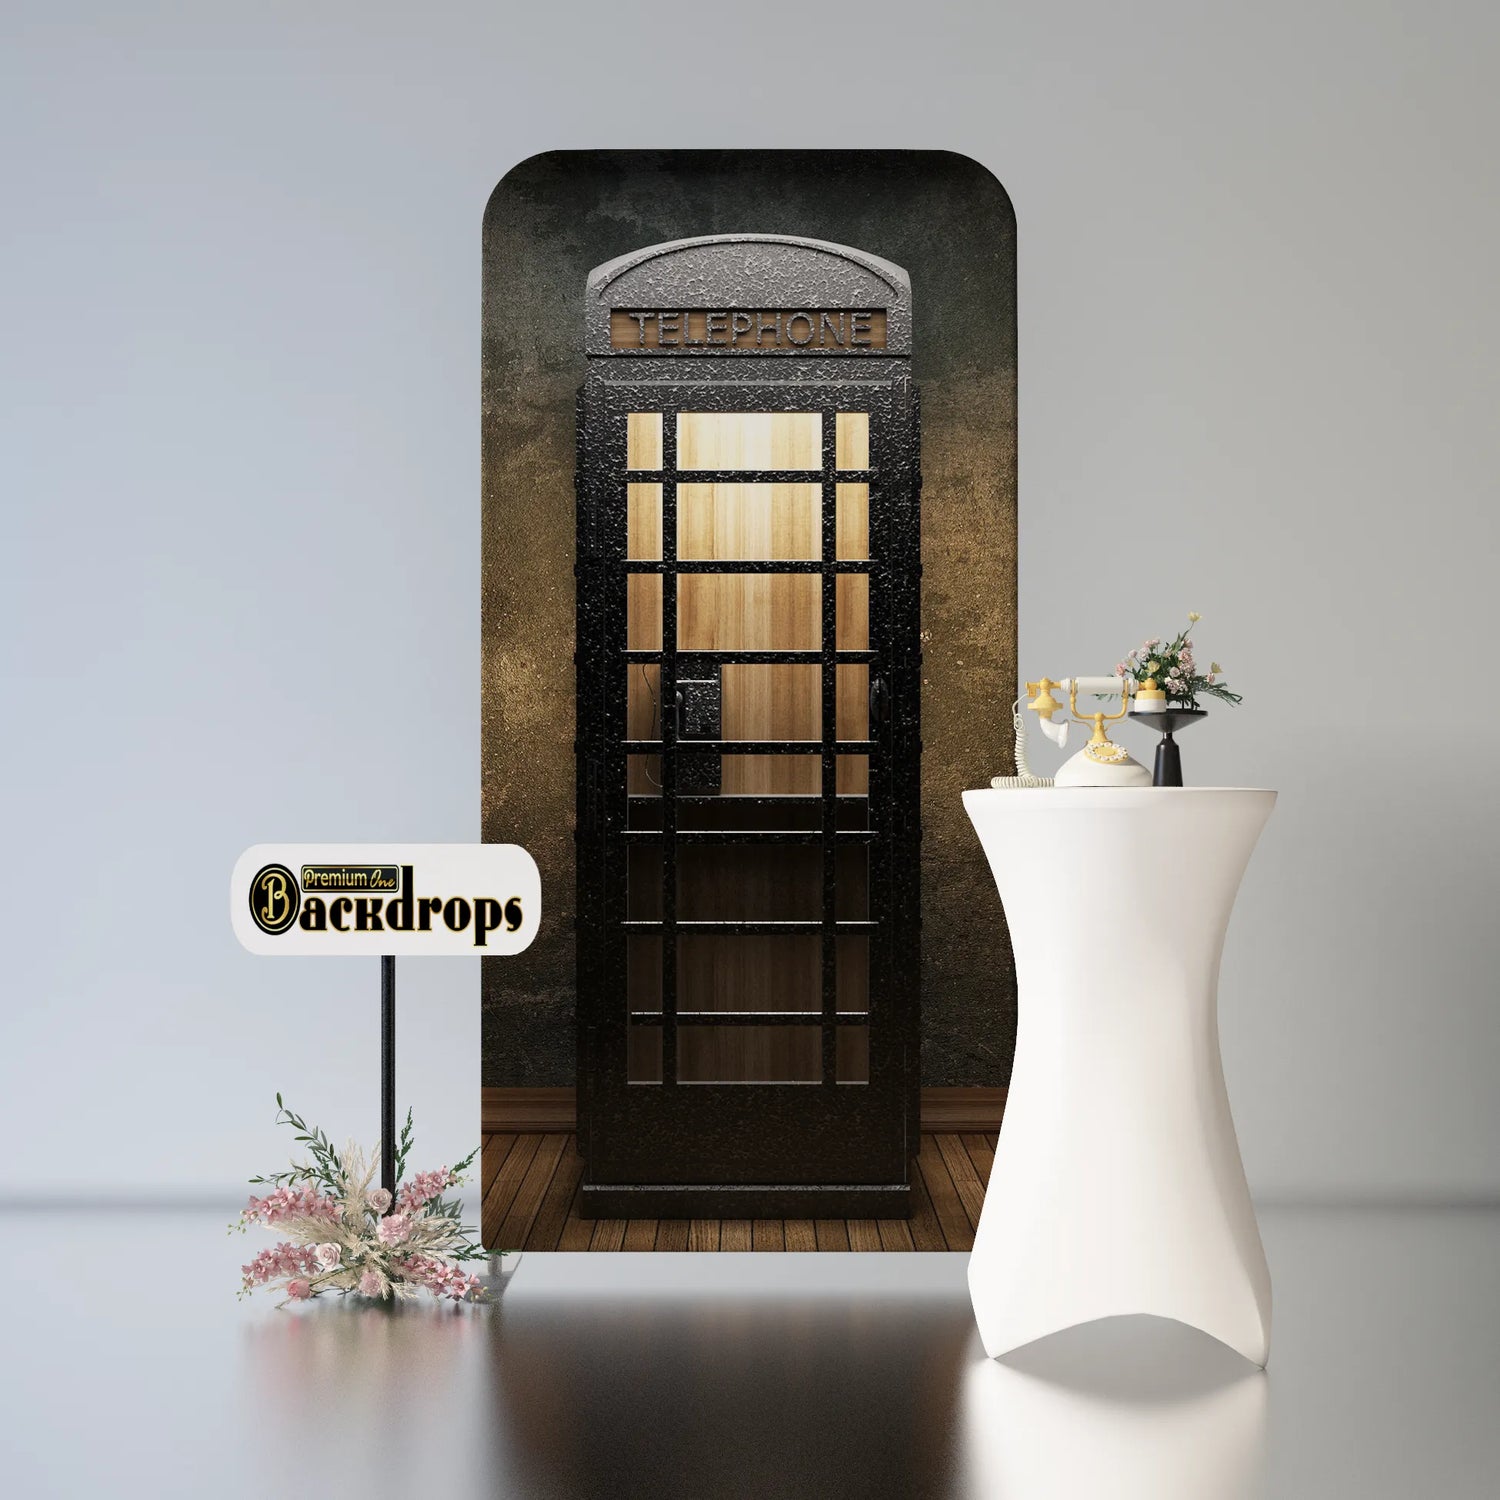 Telephone Booth Design 7